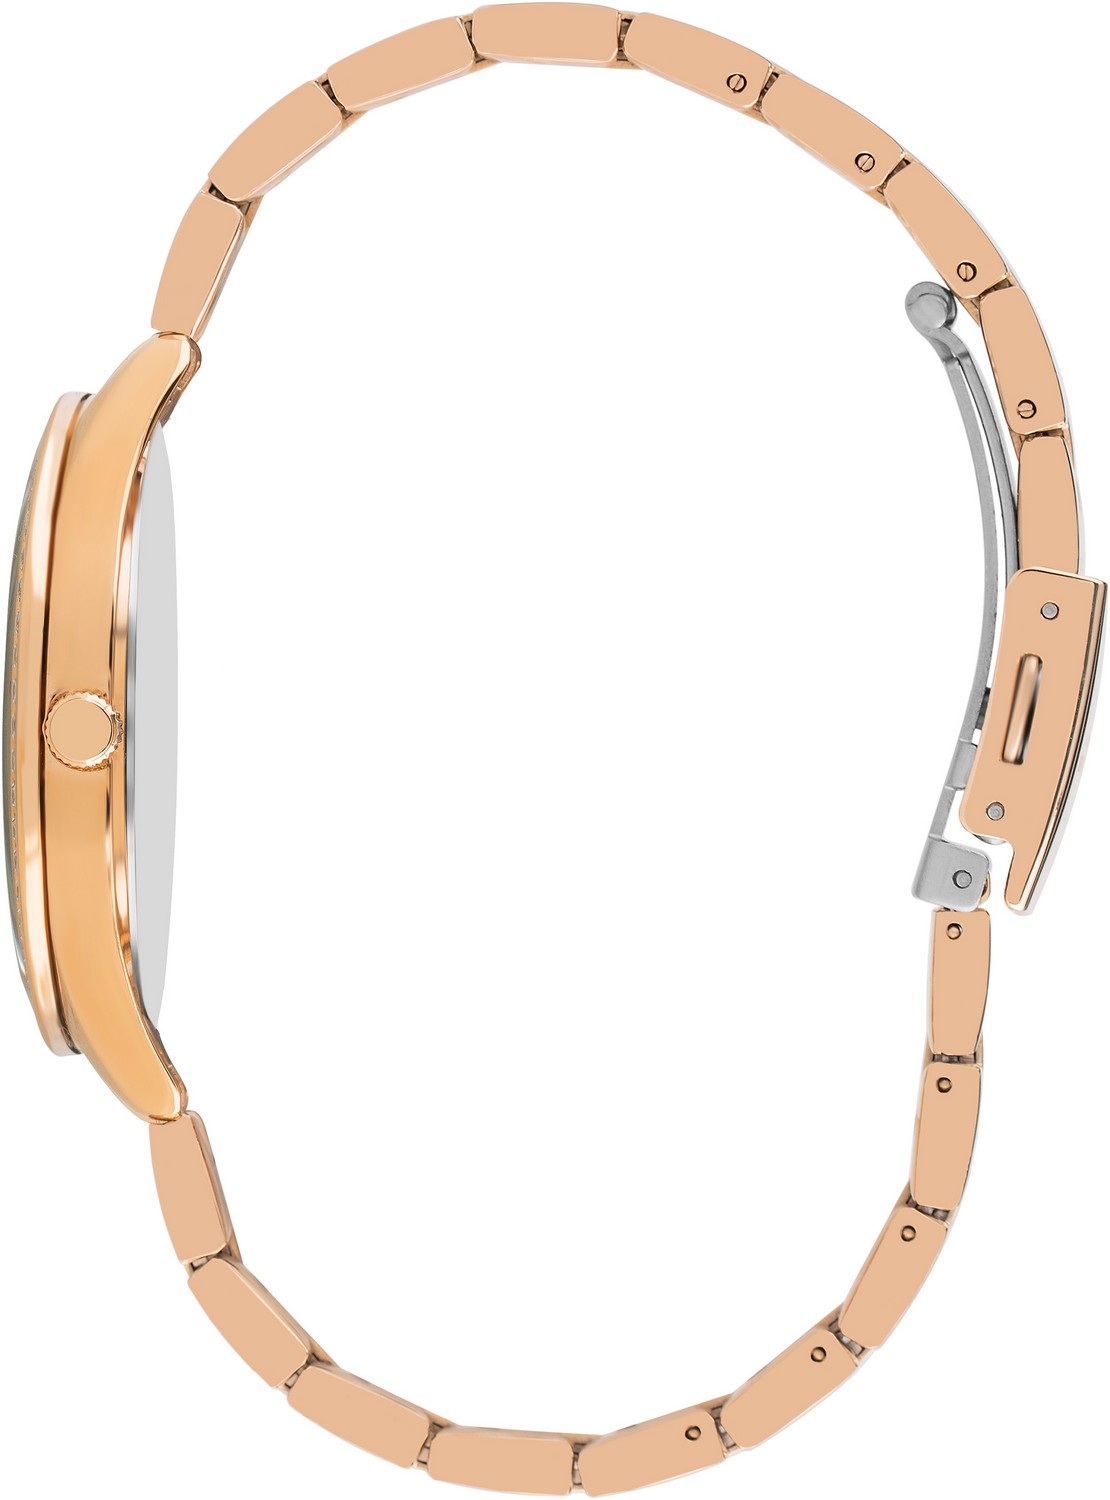 LEE COOPER  Женские часы, кварцевый механизм, суперметалл с покрытием, 33 мм